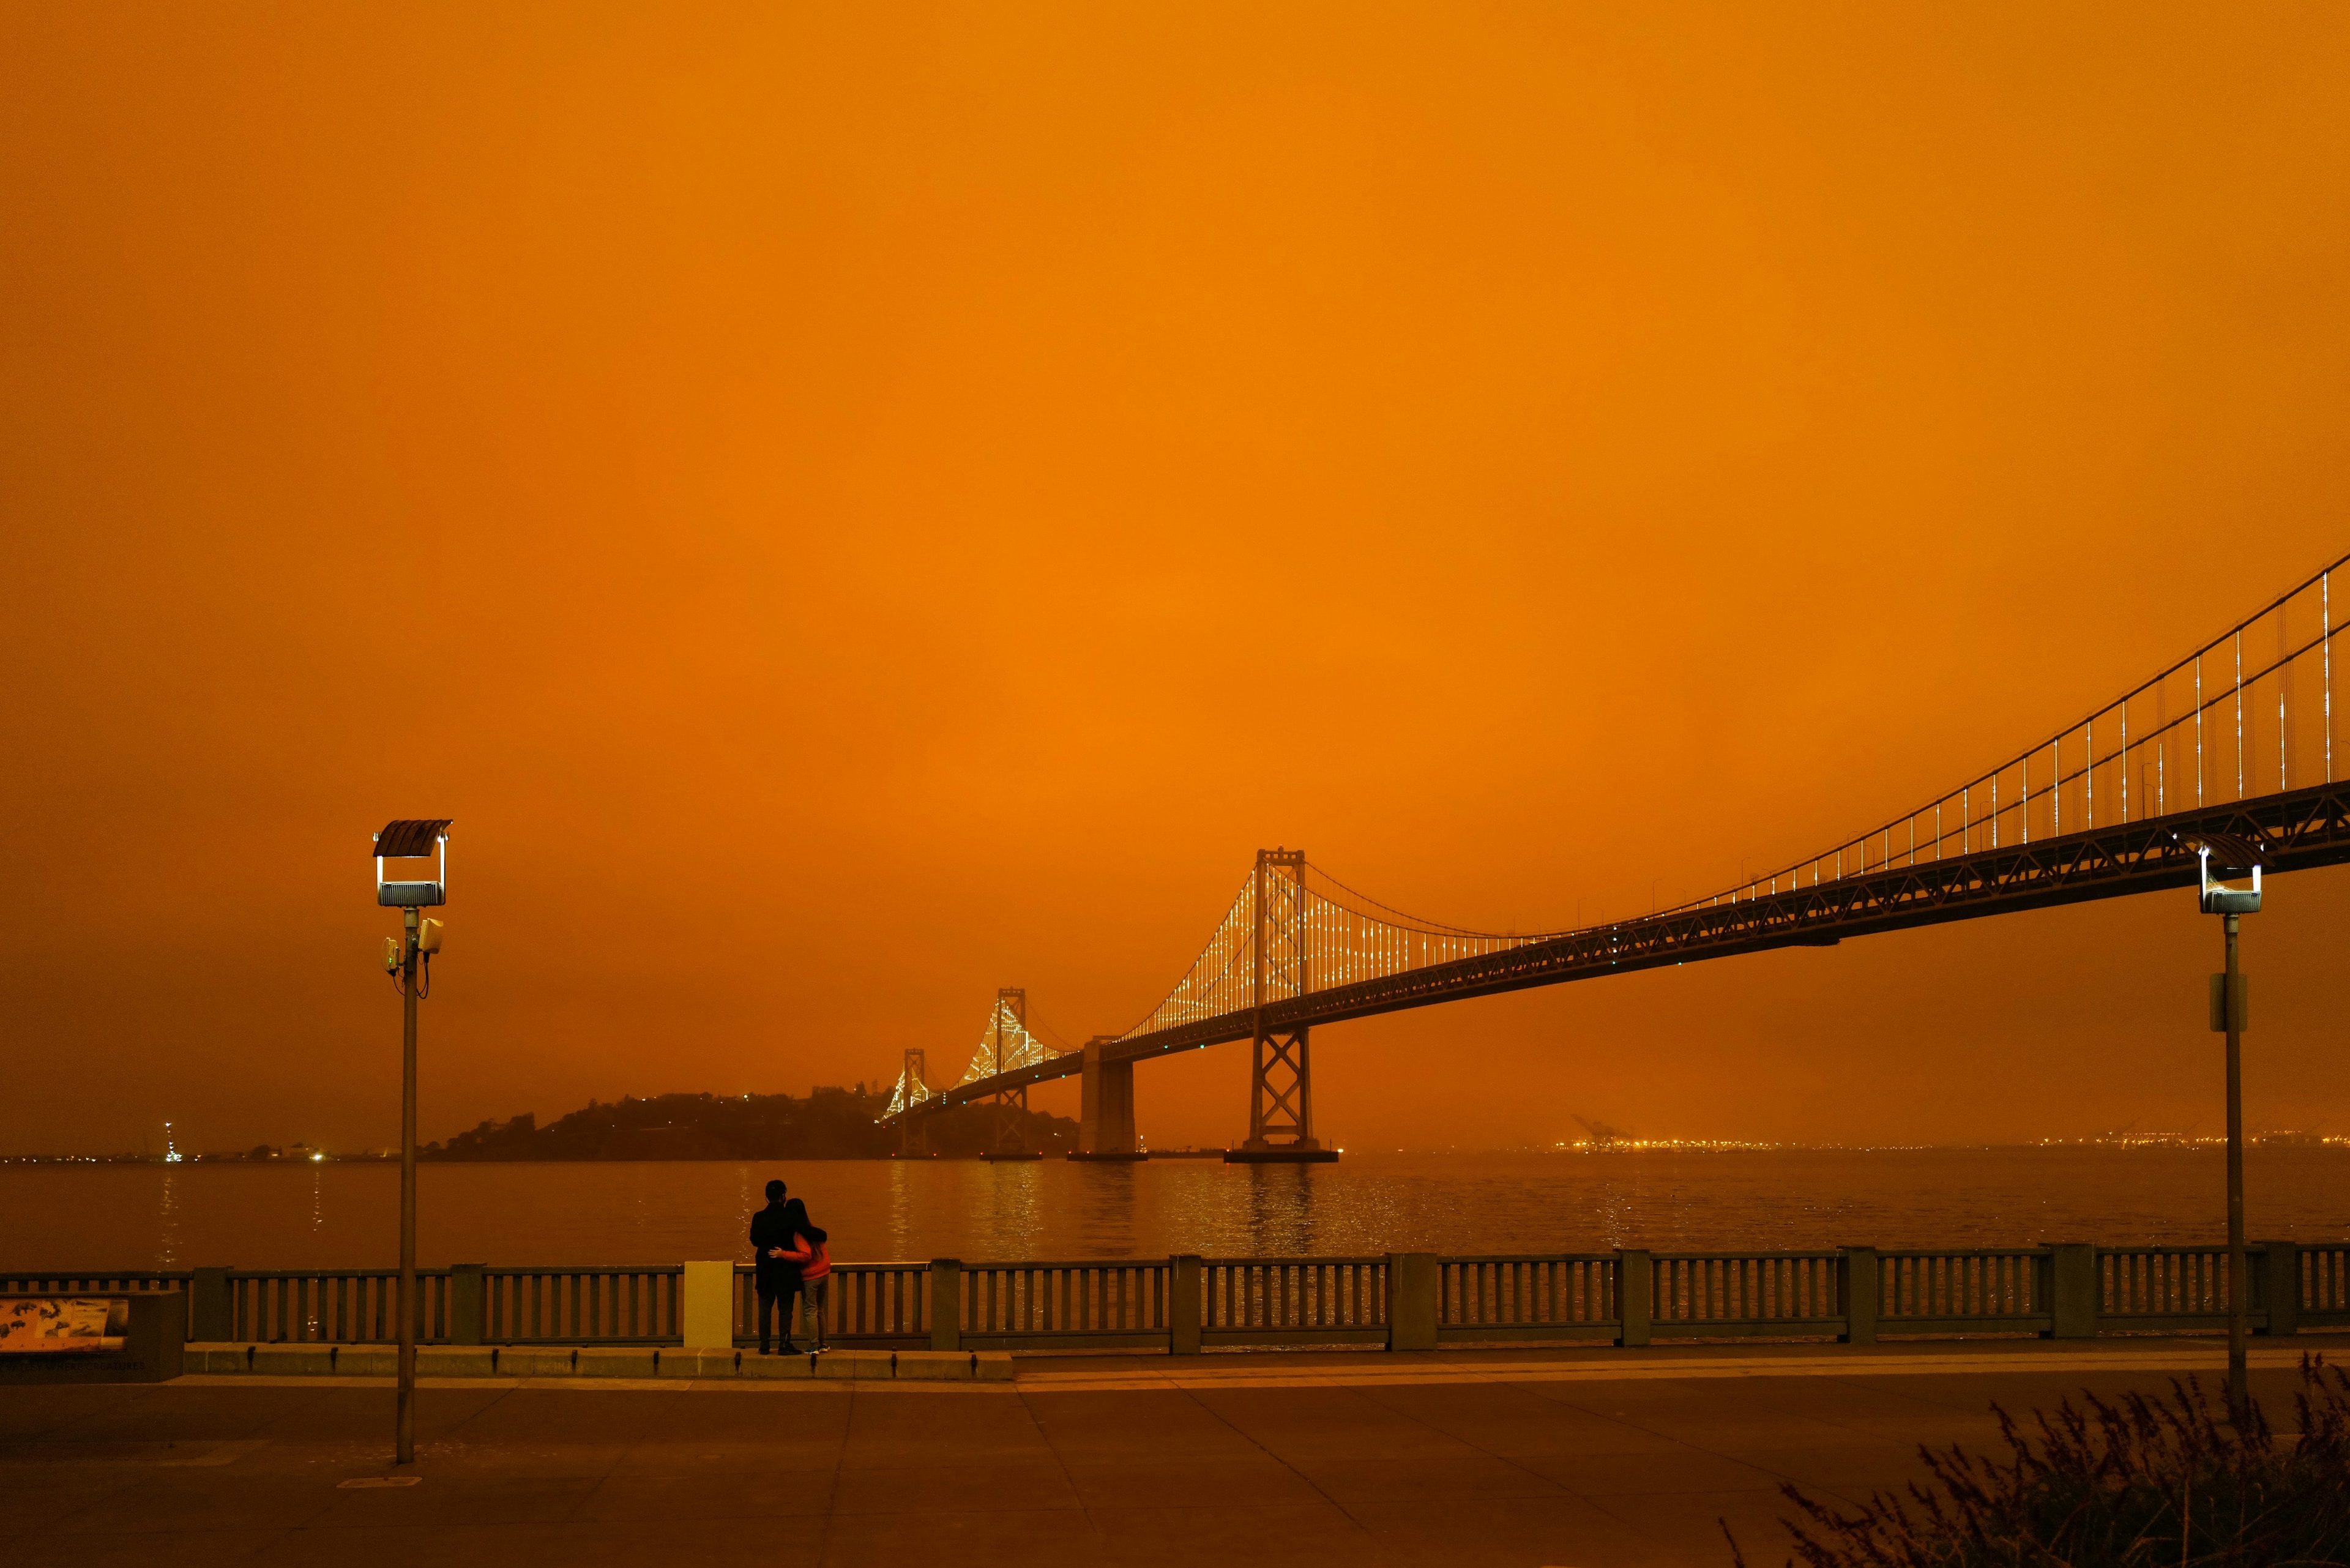 Smoky skies alter San Francisco's sky during the 2020 wildfire season. Photo by Thom Milkovic.